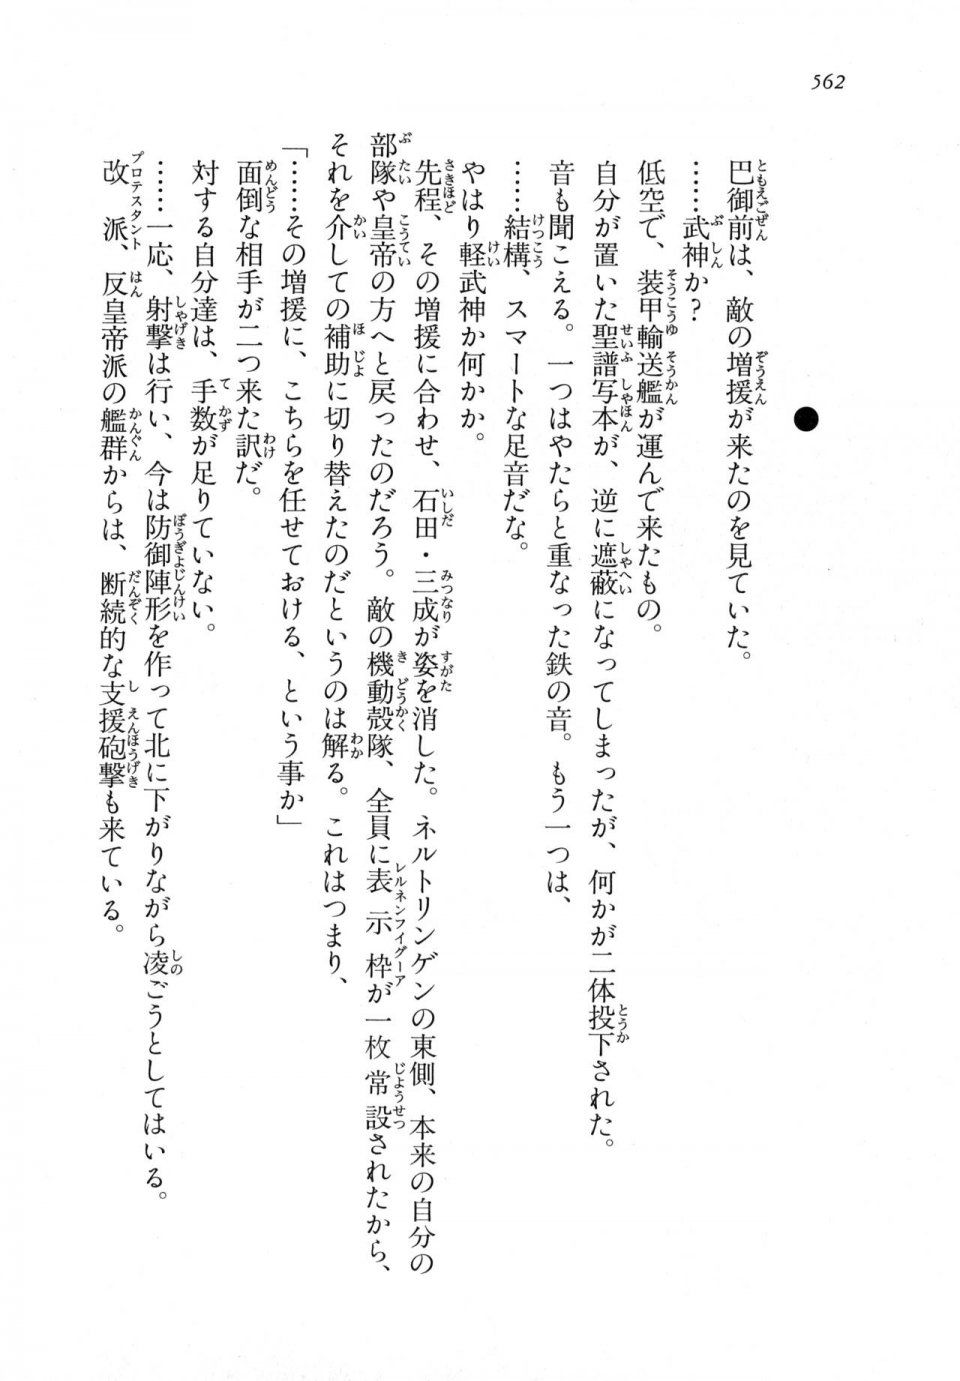 Kyoukai Senjou no Horizon LN Vol 18(7C) Part 2 - Photo #2